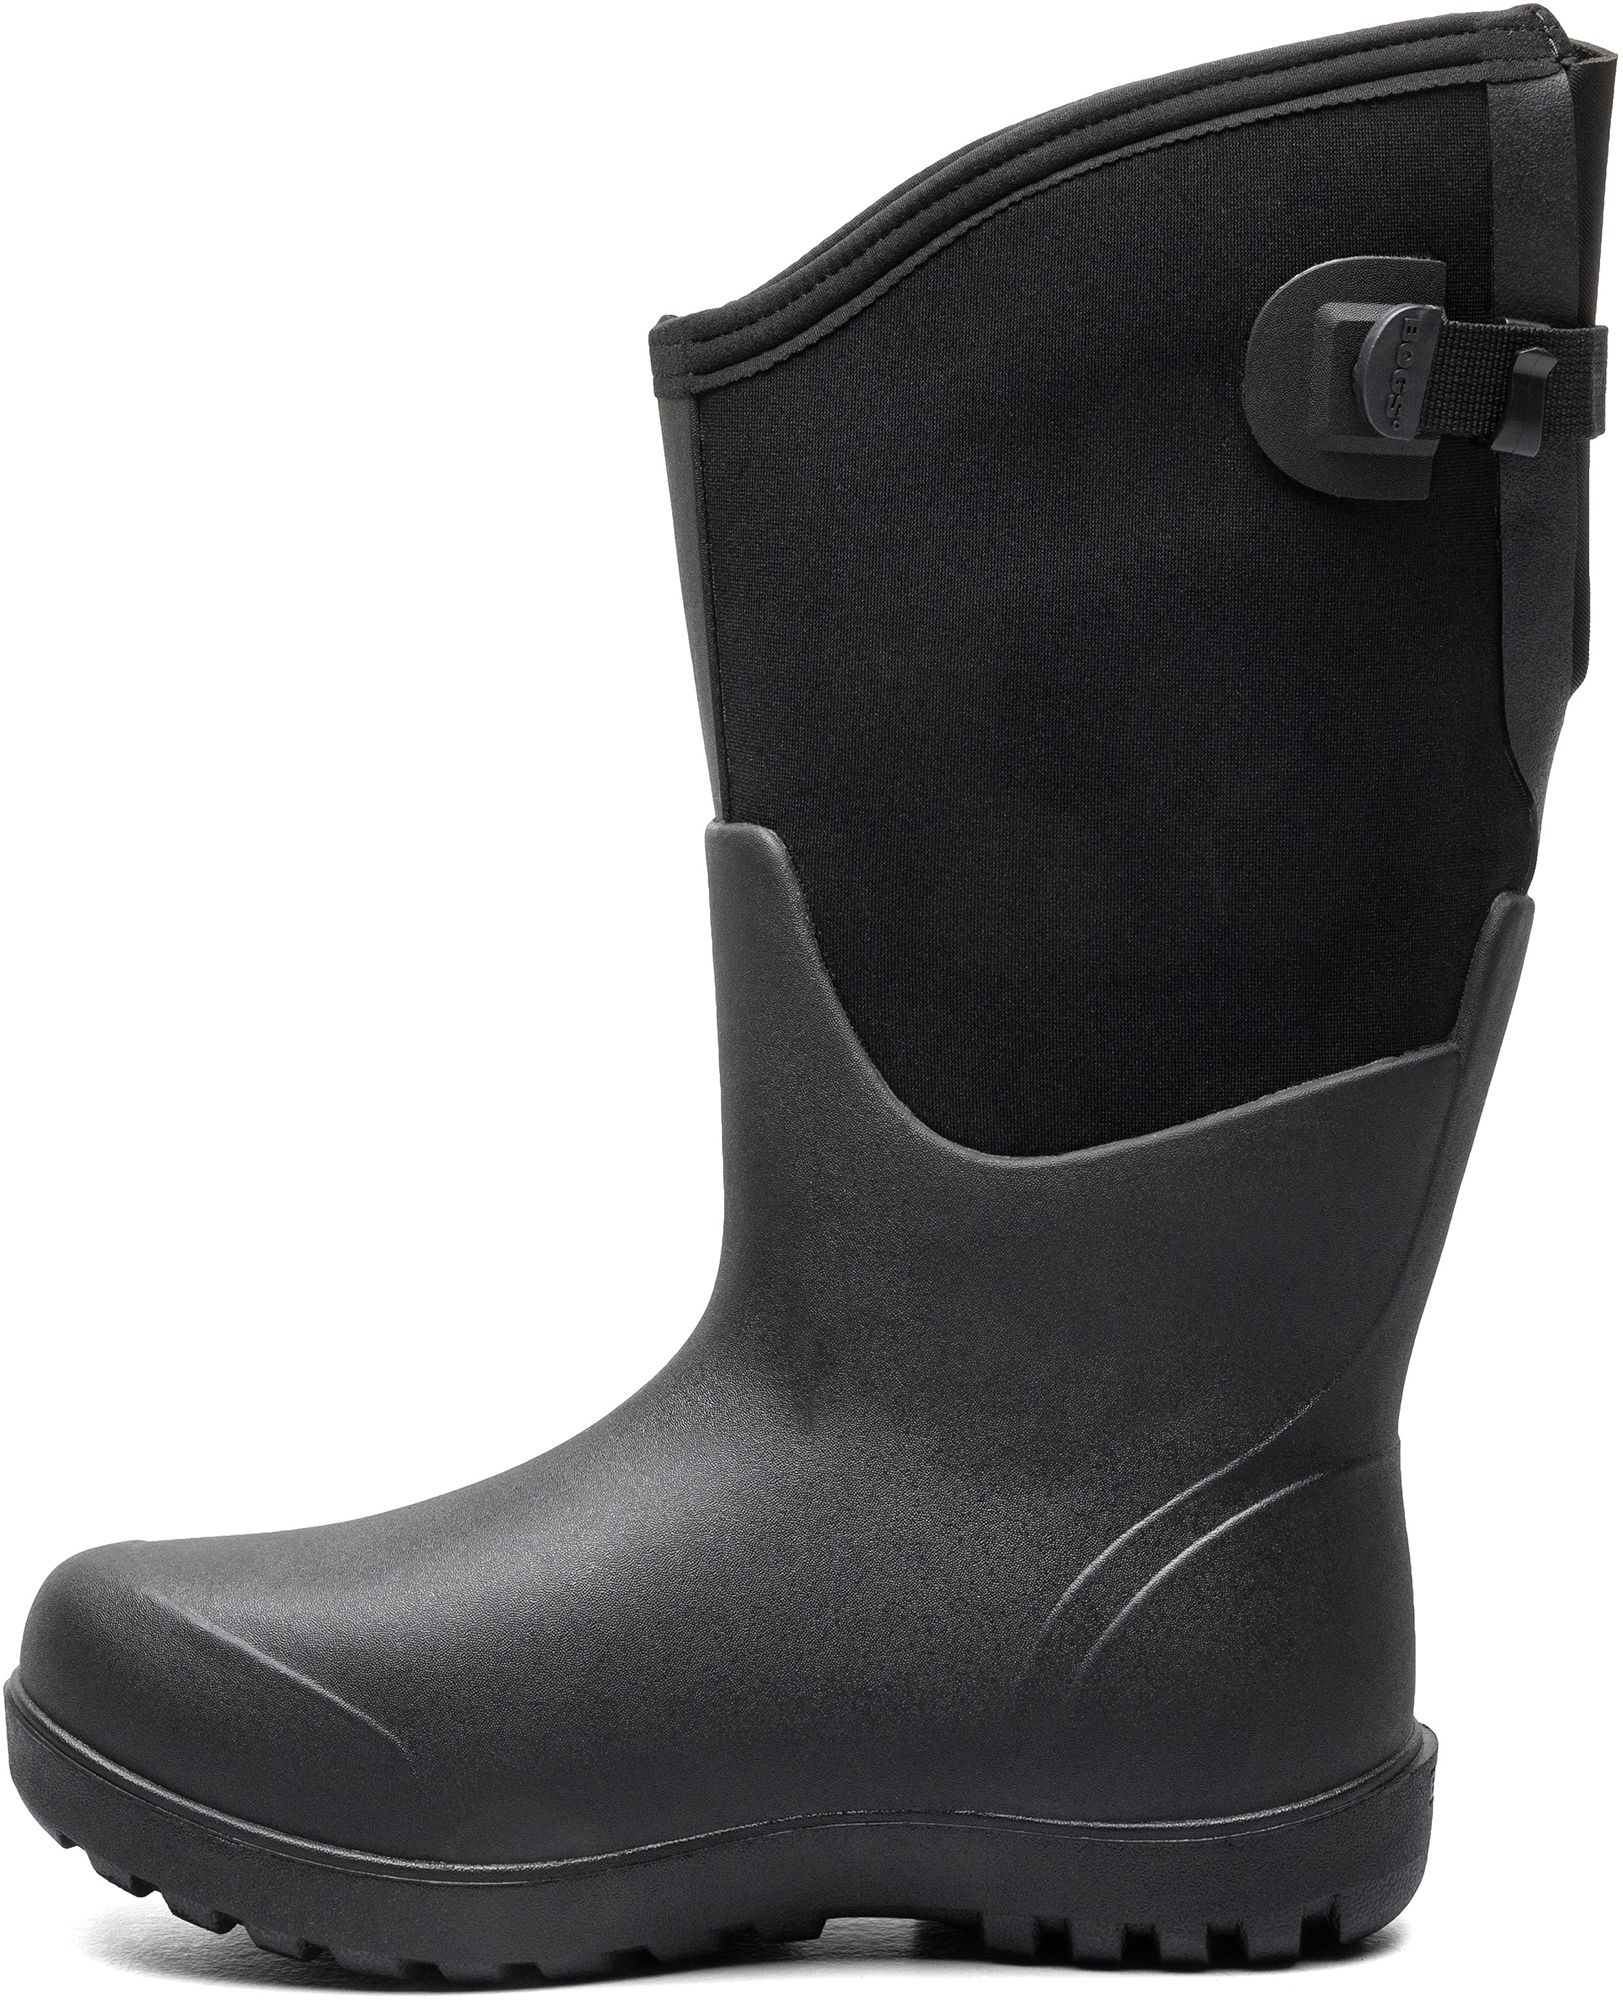 Bogs Women's Neo Classic Adjustable Calf Waterproof Farm Boots